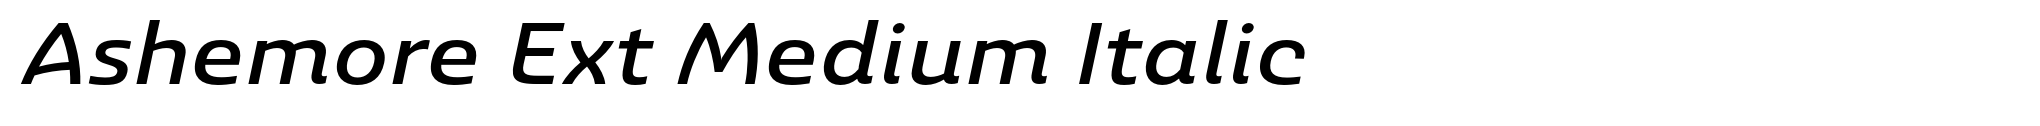 Ashemore Ext Medium Italic image